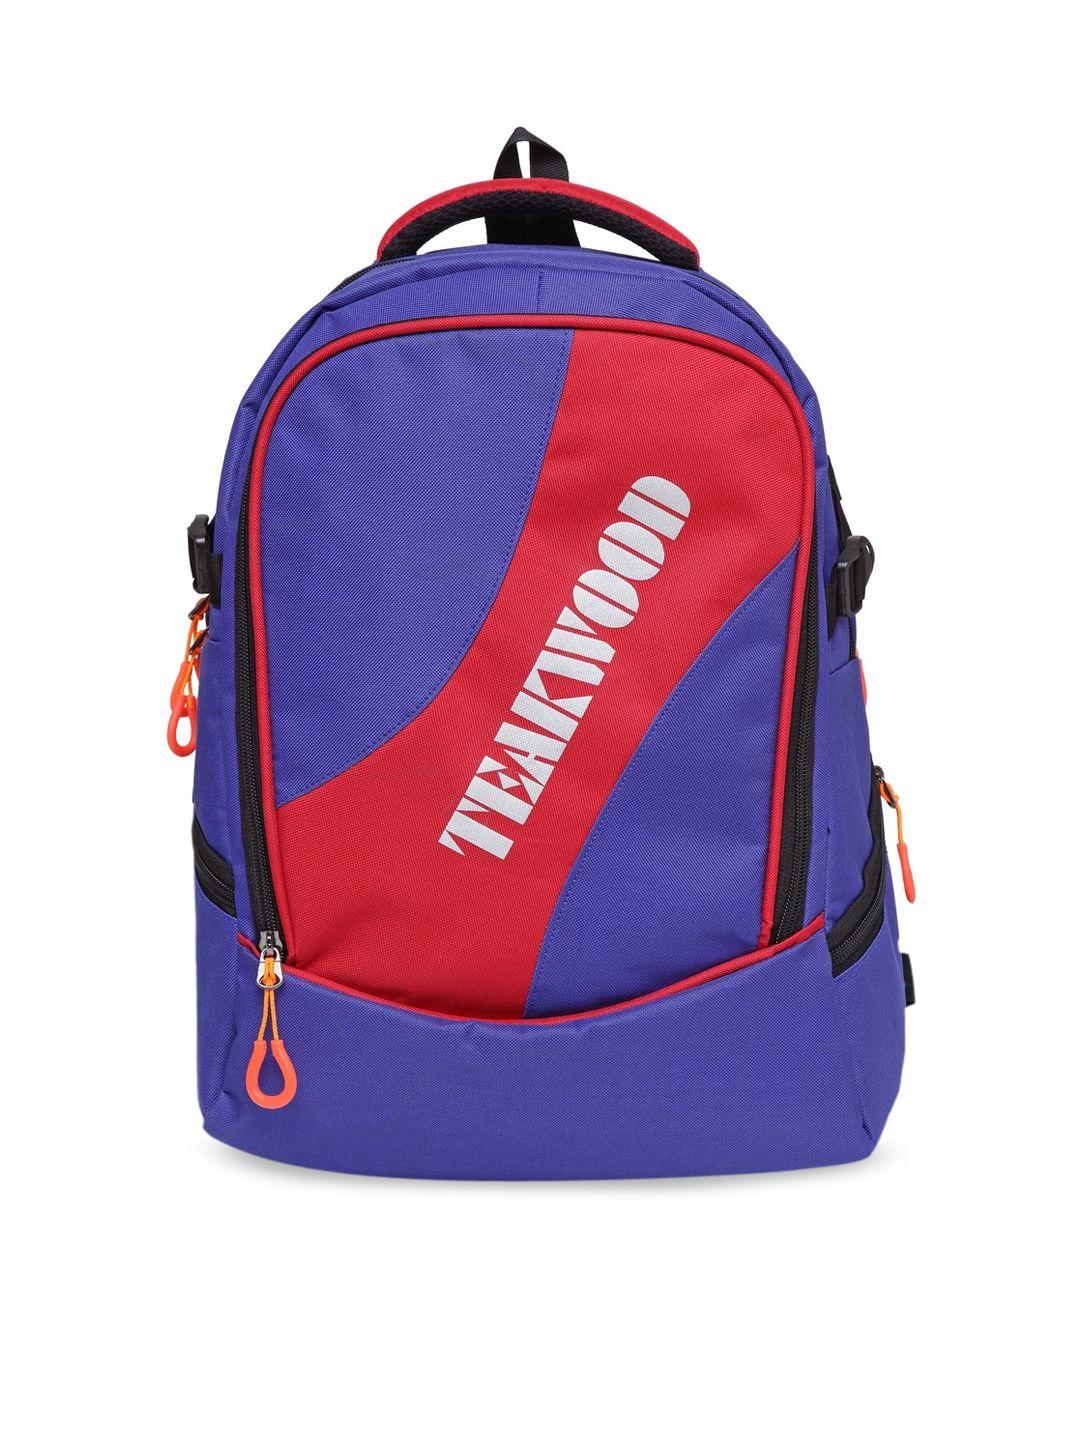 teakwood leathers unisex violet & red colourblocked backpack